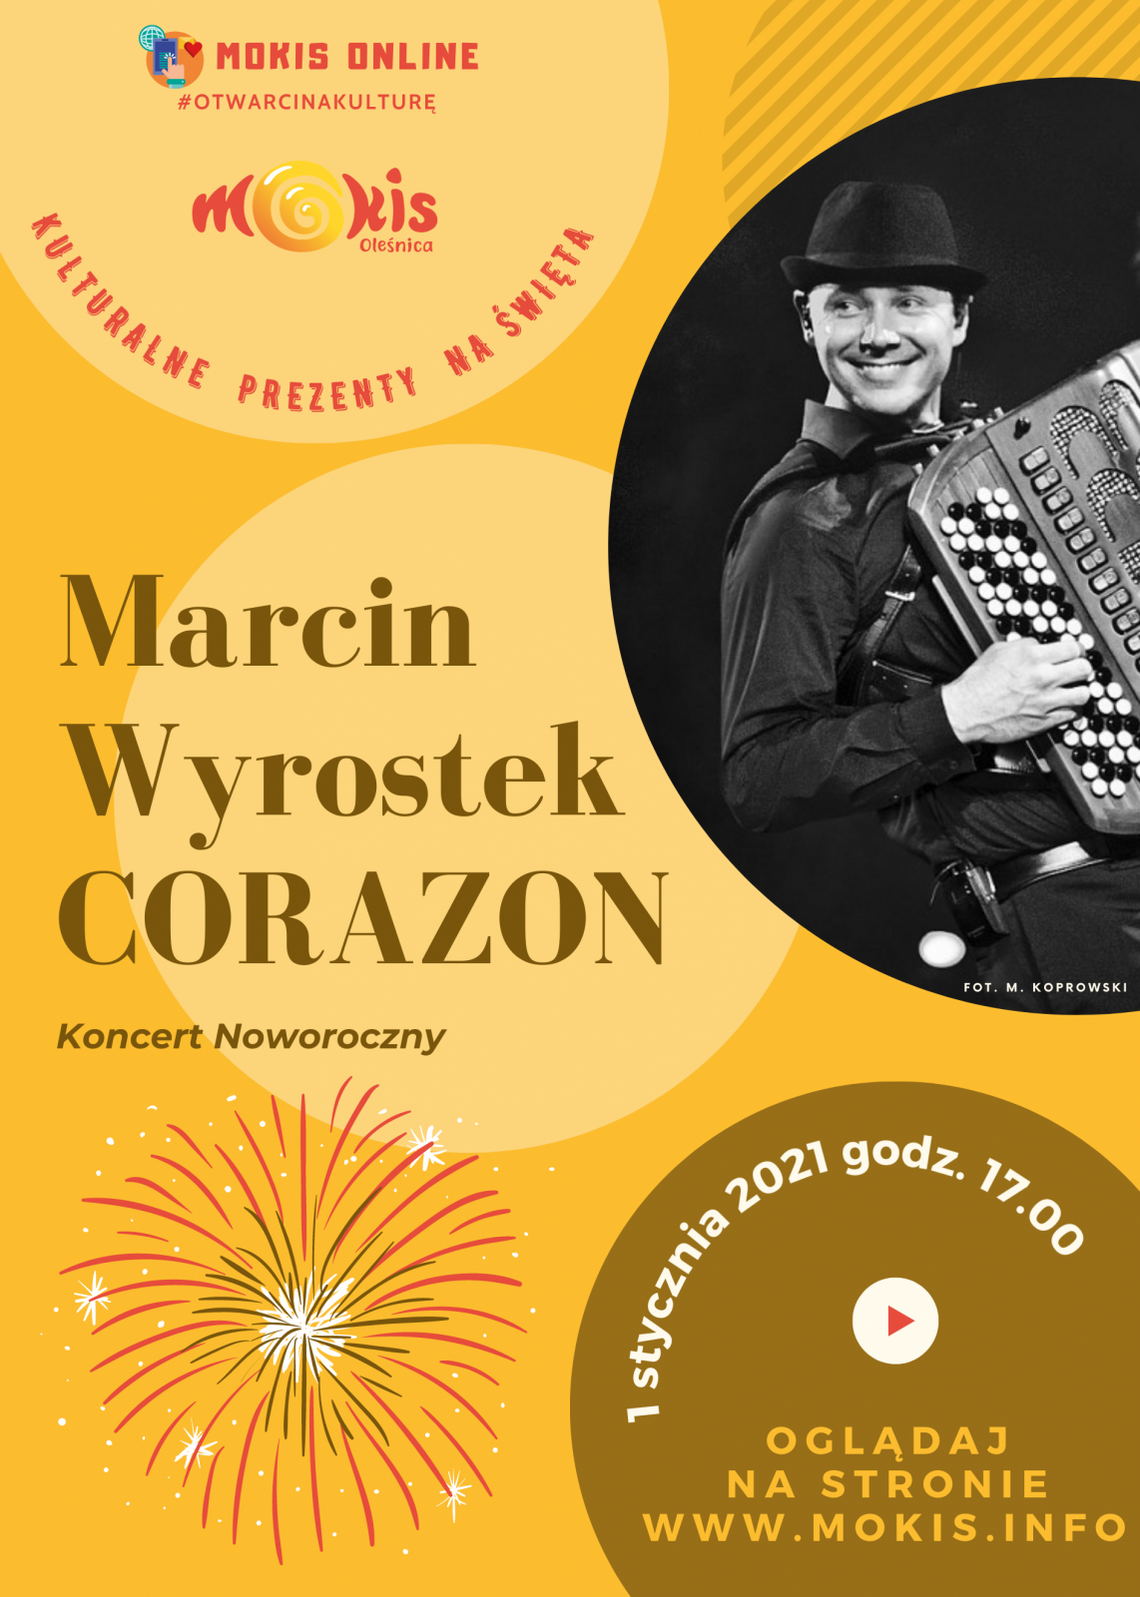 MOKiS zaprasza na koncert Marcina Wyrostka